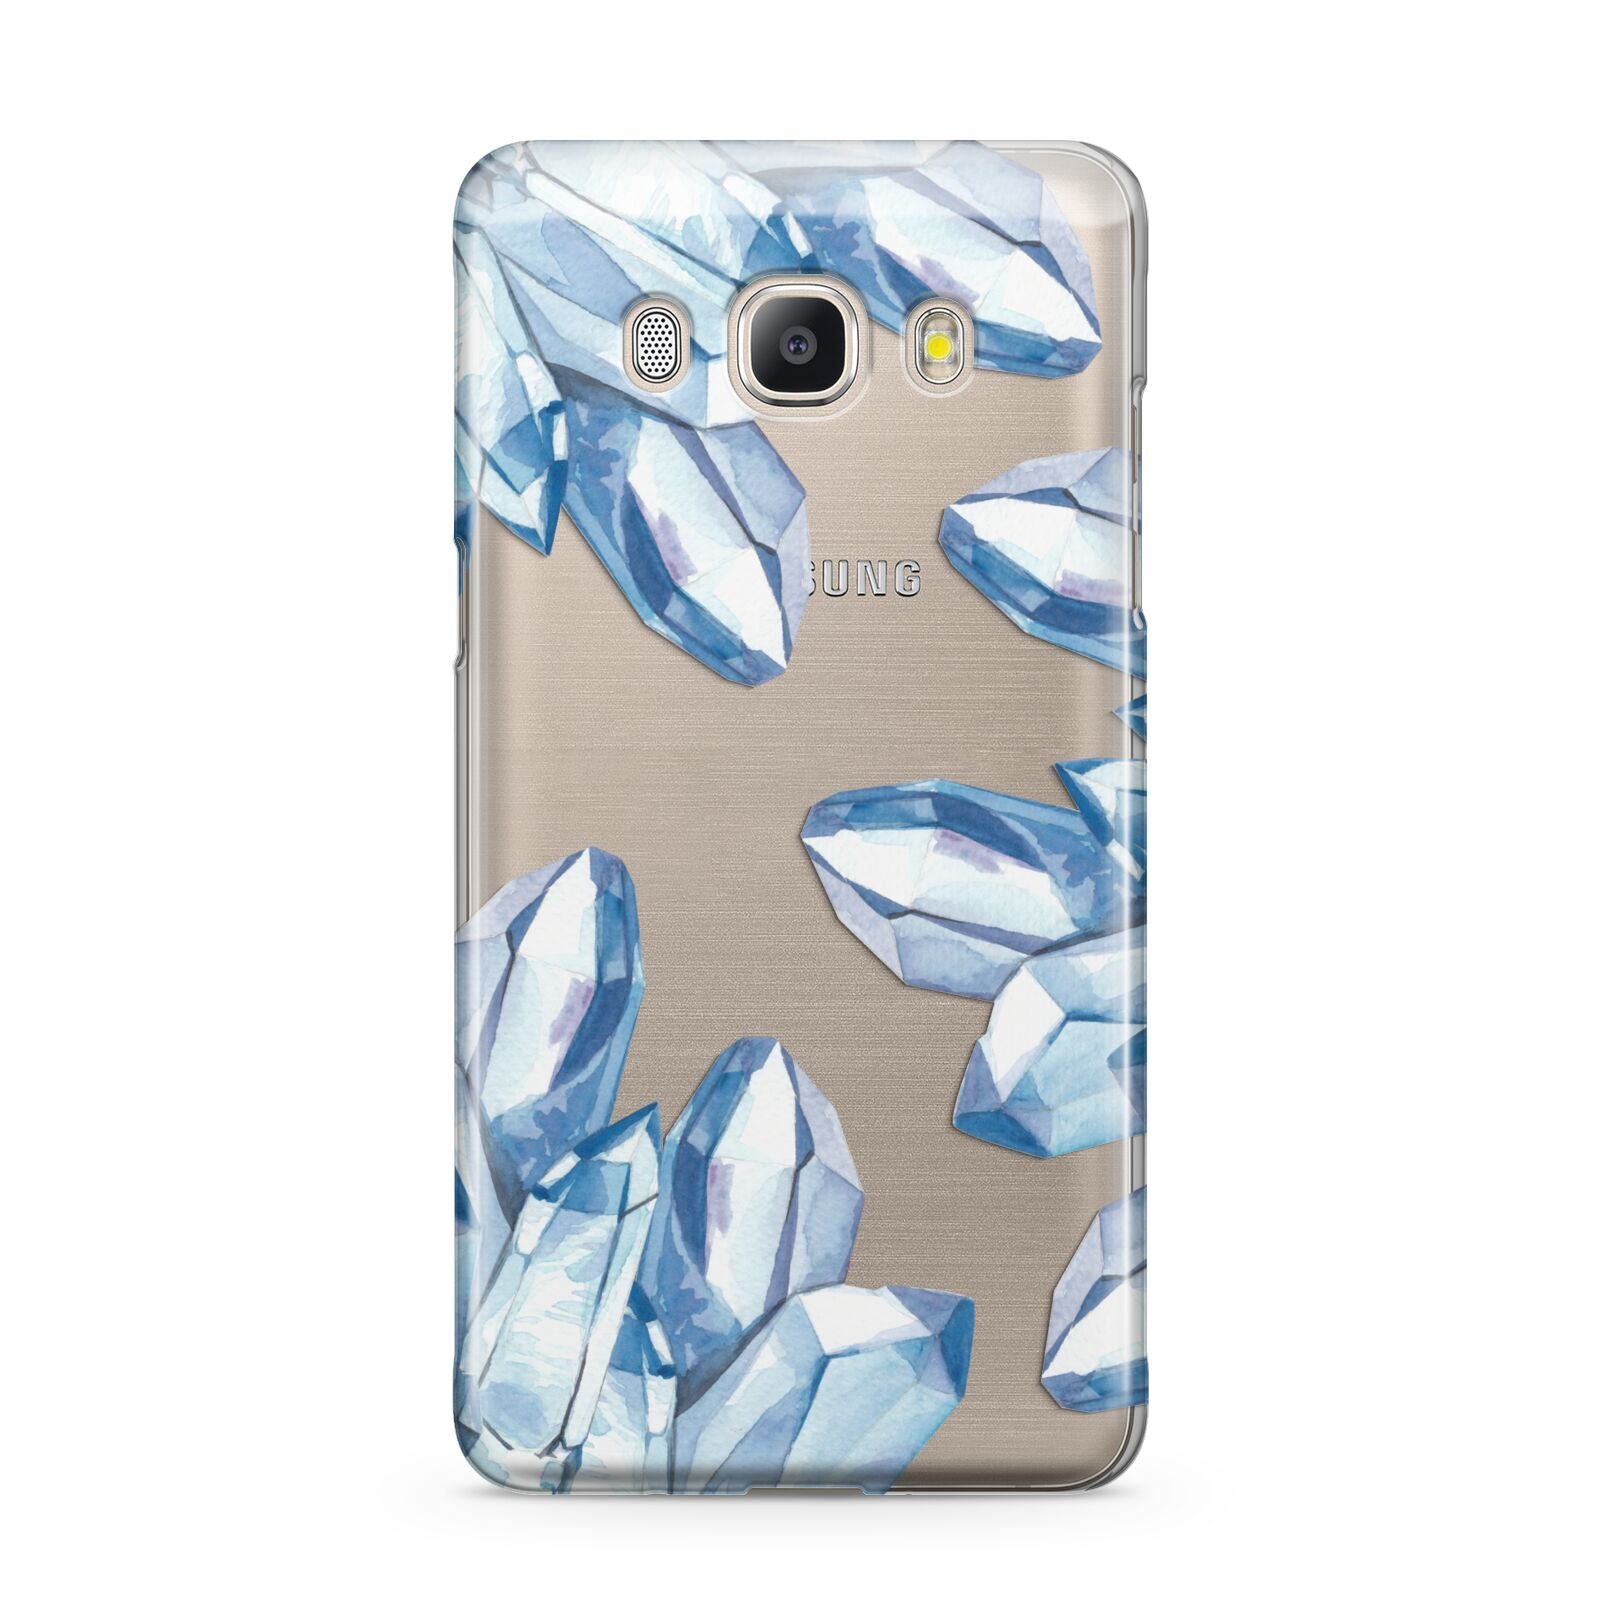 Blue Crystals Samsung Galaxy J5 2016 Case